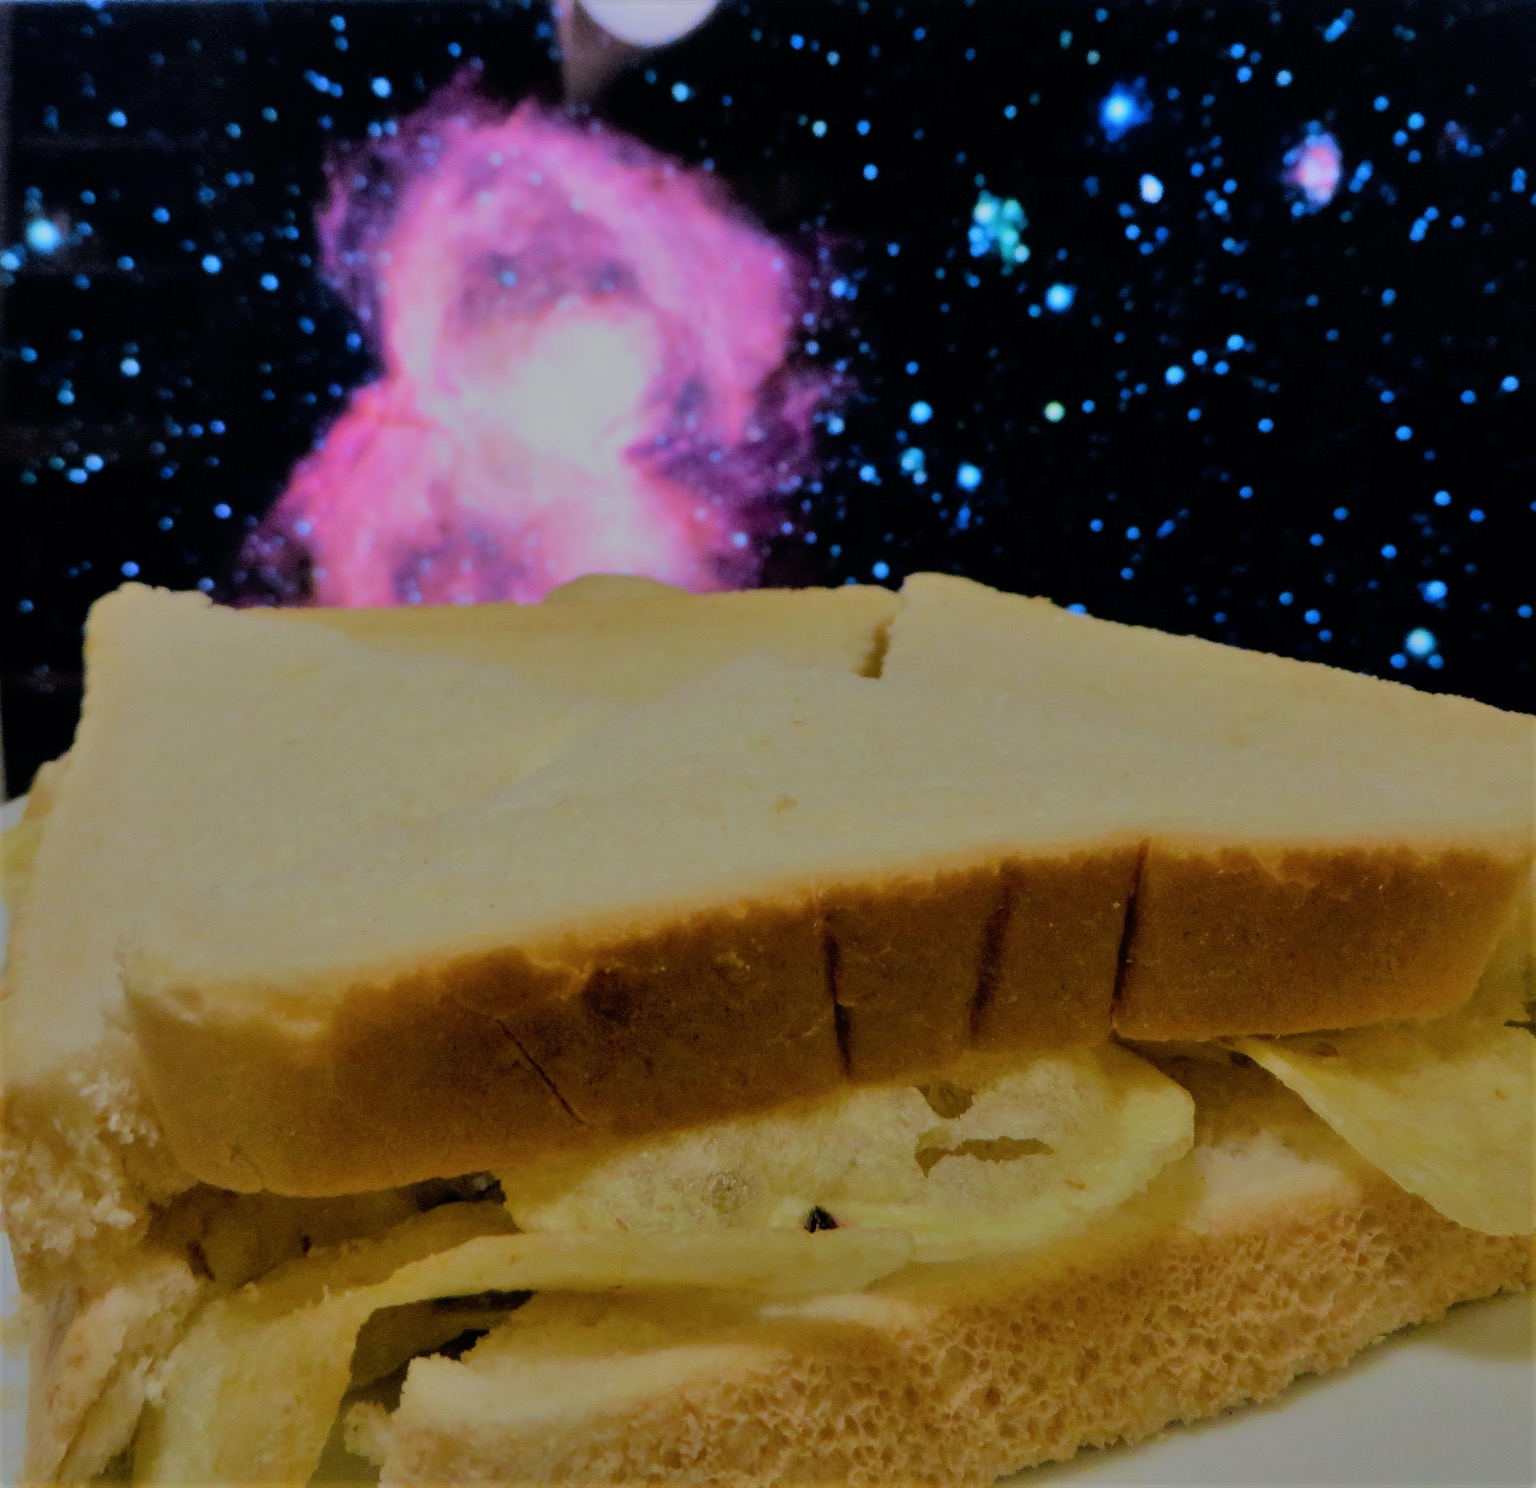 Quartered white crisp sandwich with space backdrop